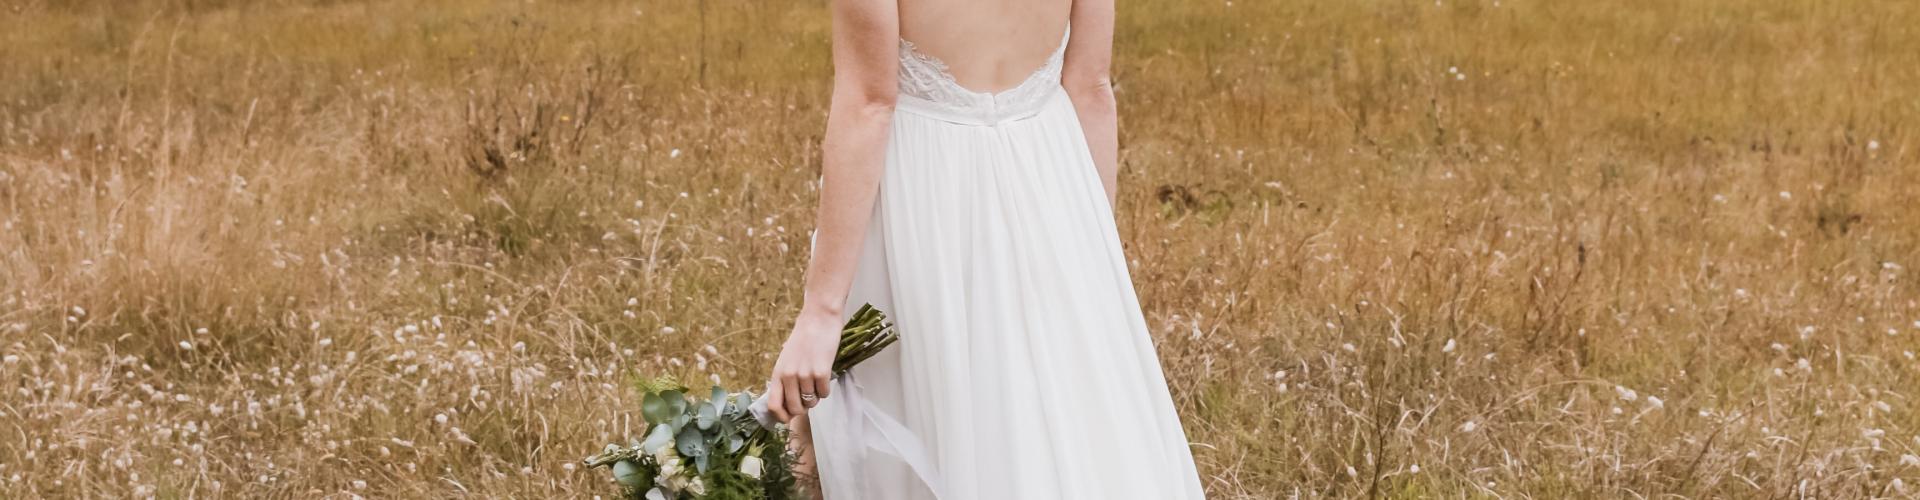 le mariage minimaliste : Comment choisir sa tenue ? 